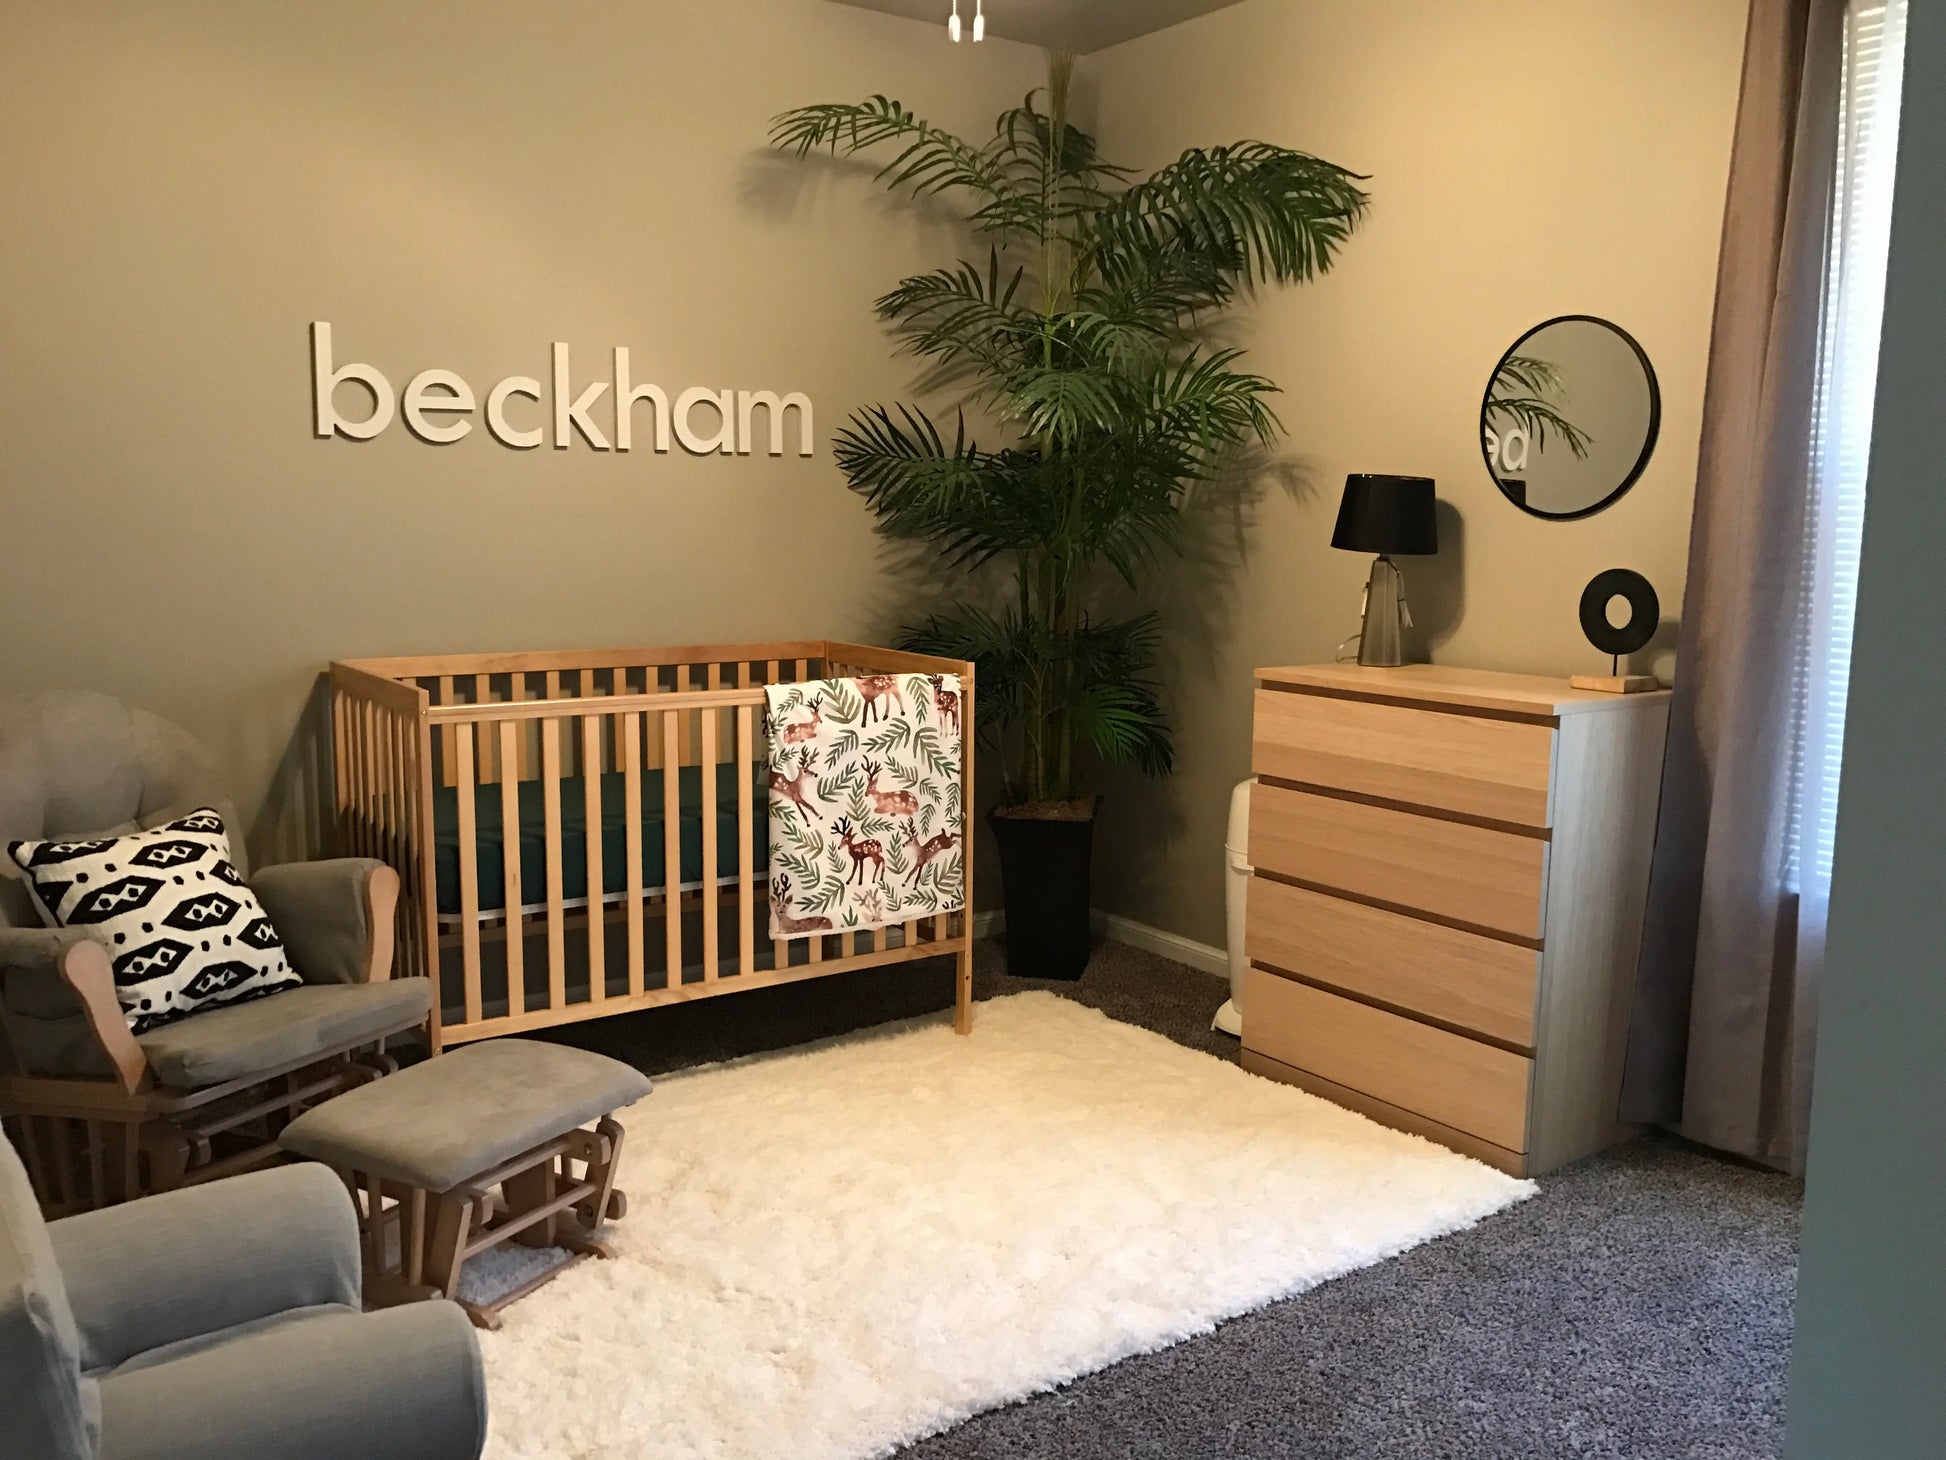 Custom nursery name signs - beckham.